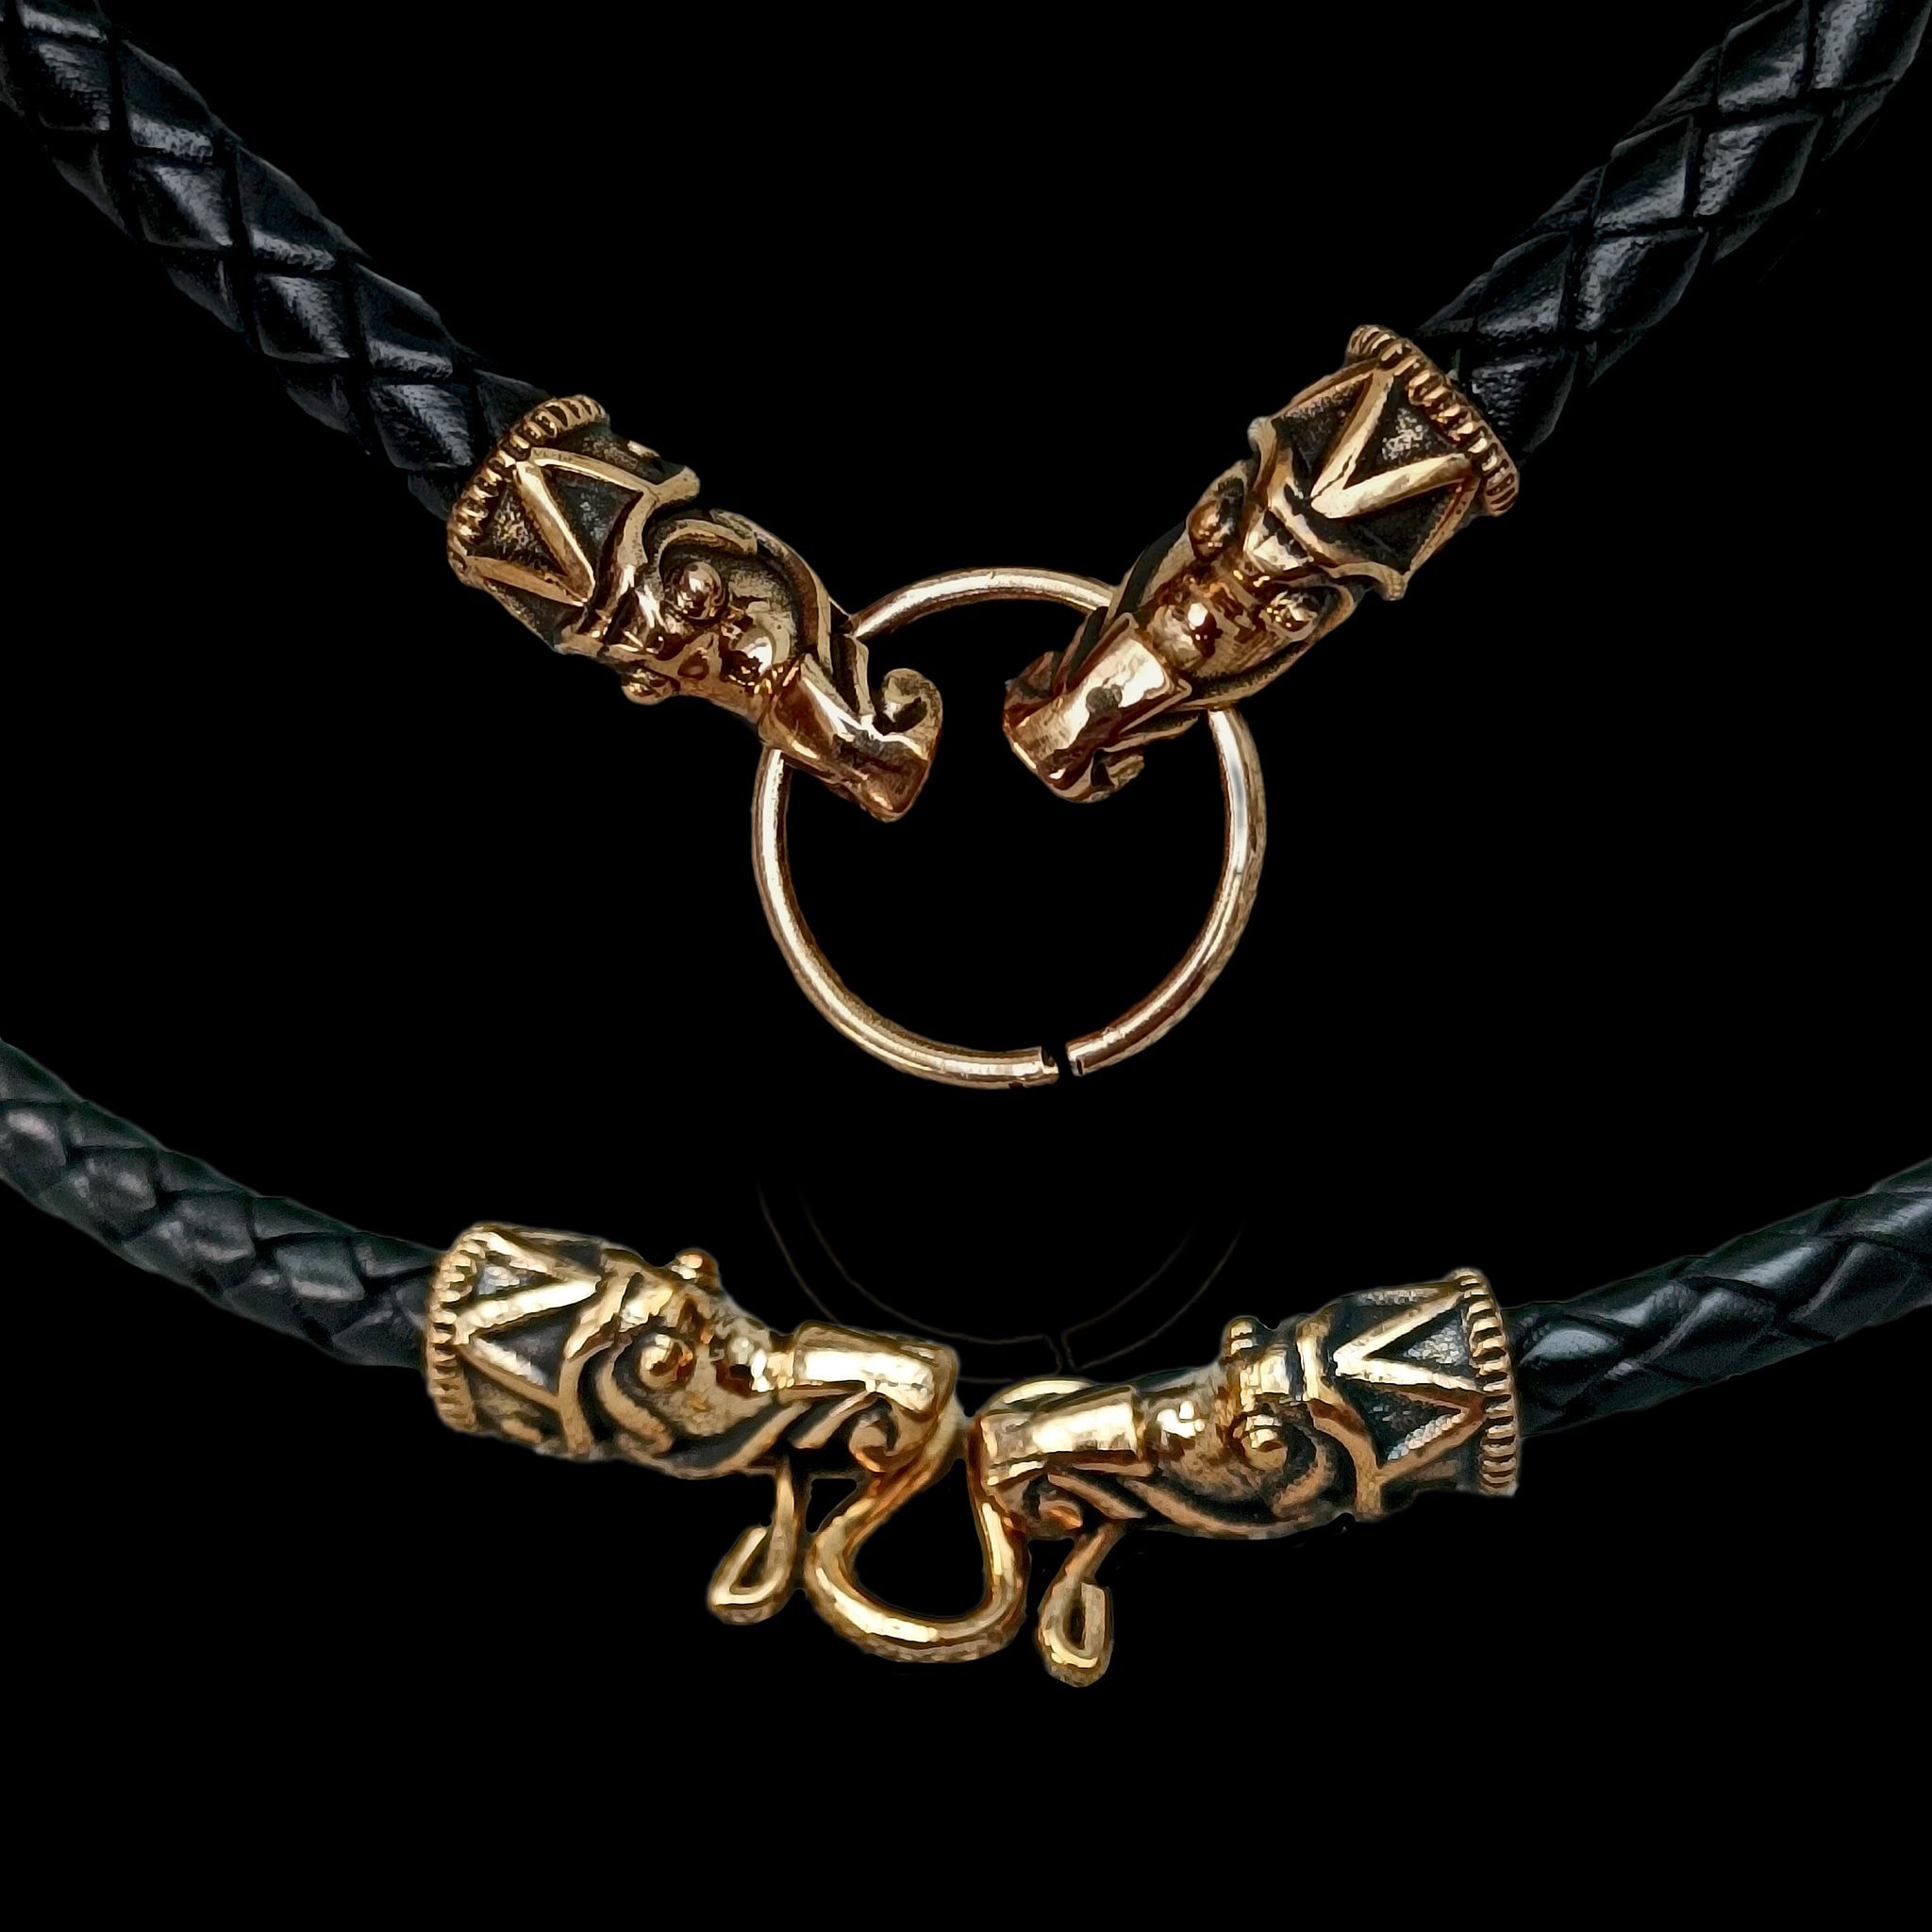 Braided Leather Necklaces with Bronze Gotlandic Dragon Heads - 8mm & 5mm Widthss